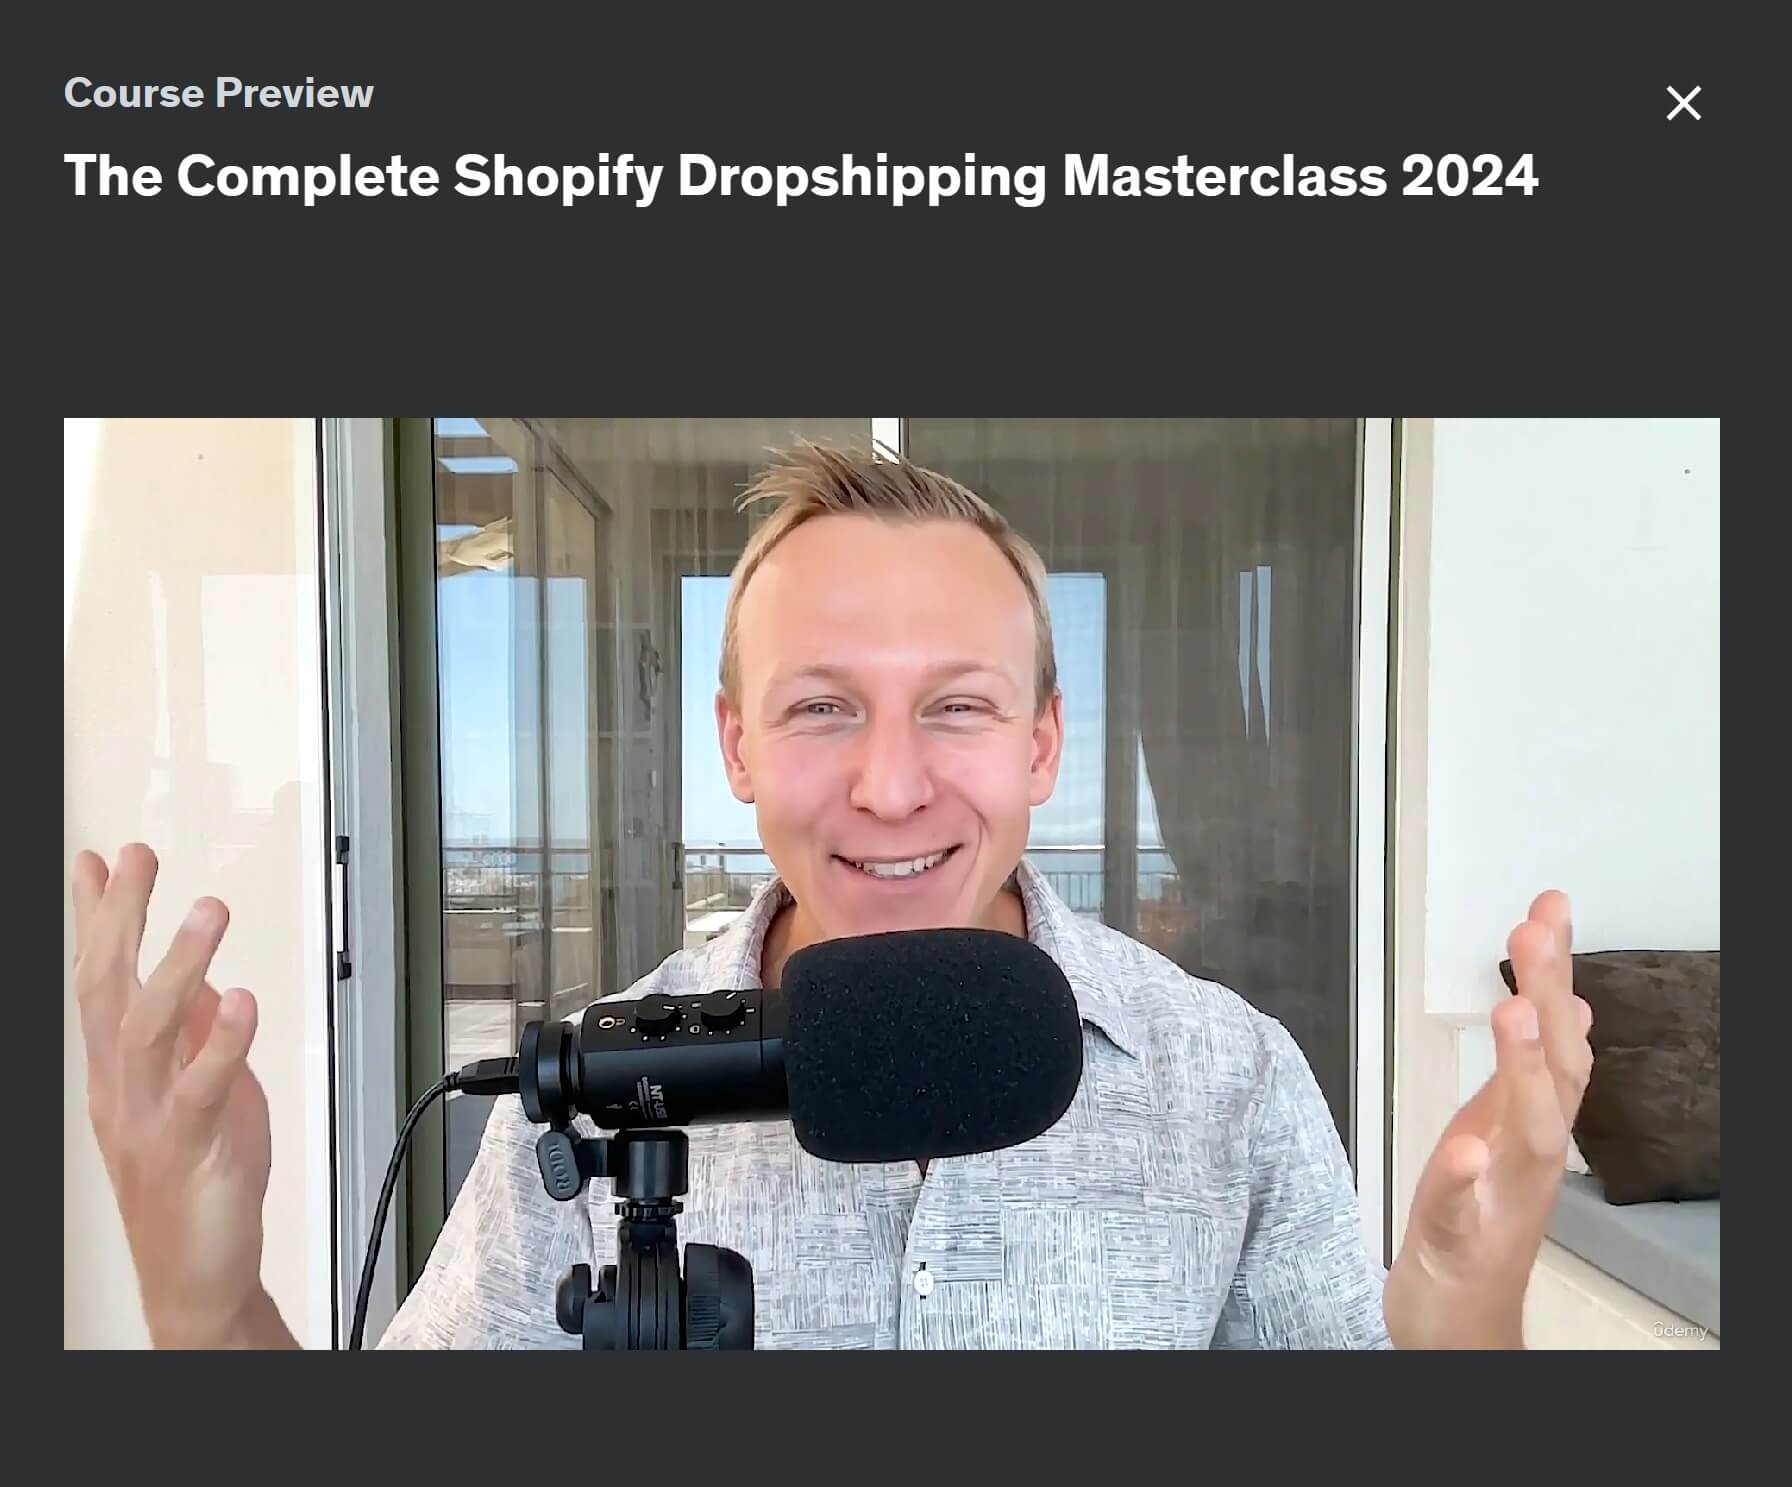 Pełna prezentacja Masterclass Shopify Dropshipping 2024 – podgląd